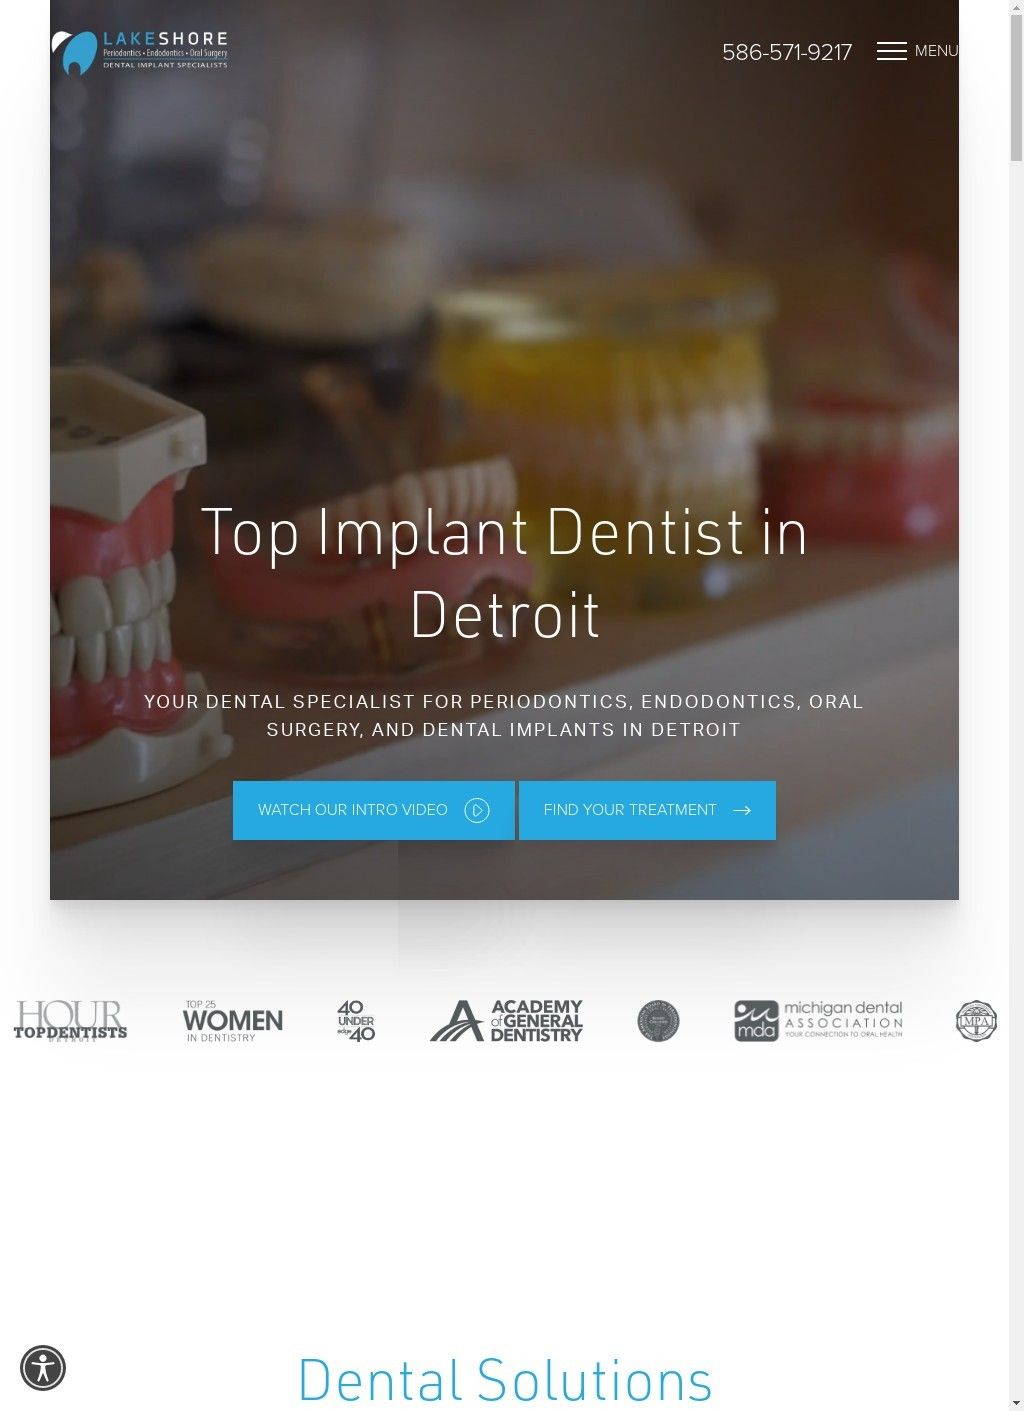 Detroit Dental Implants Specialist